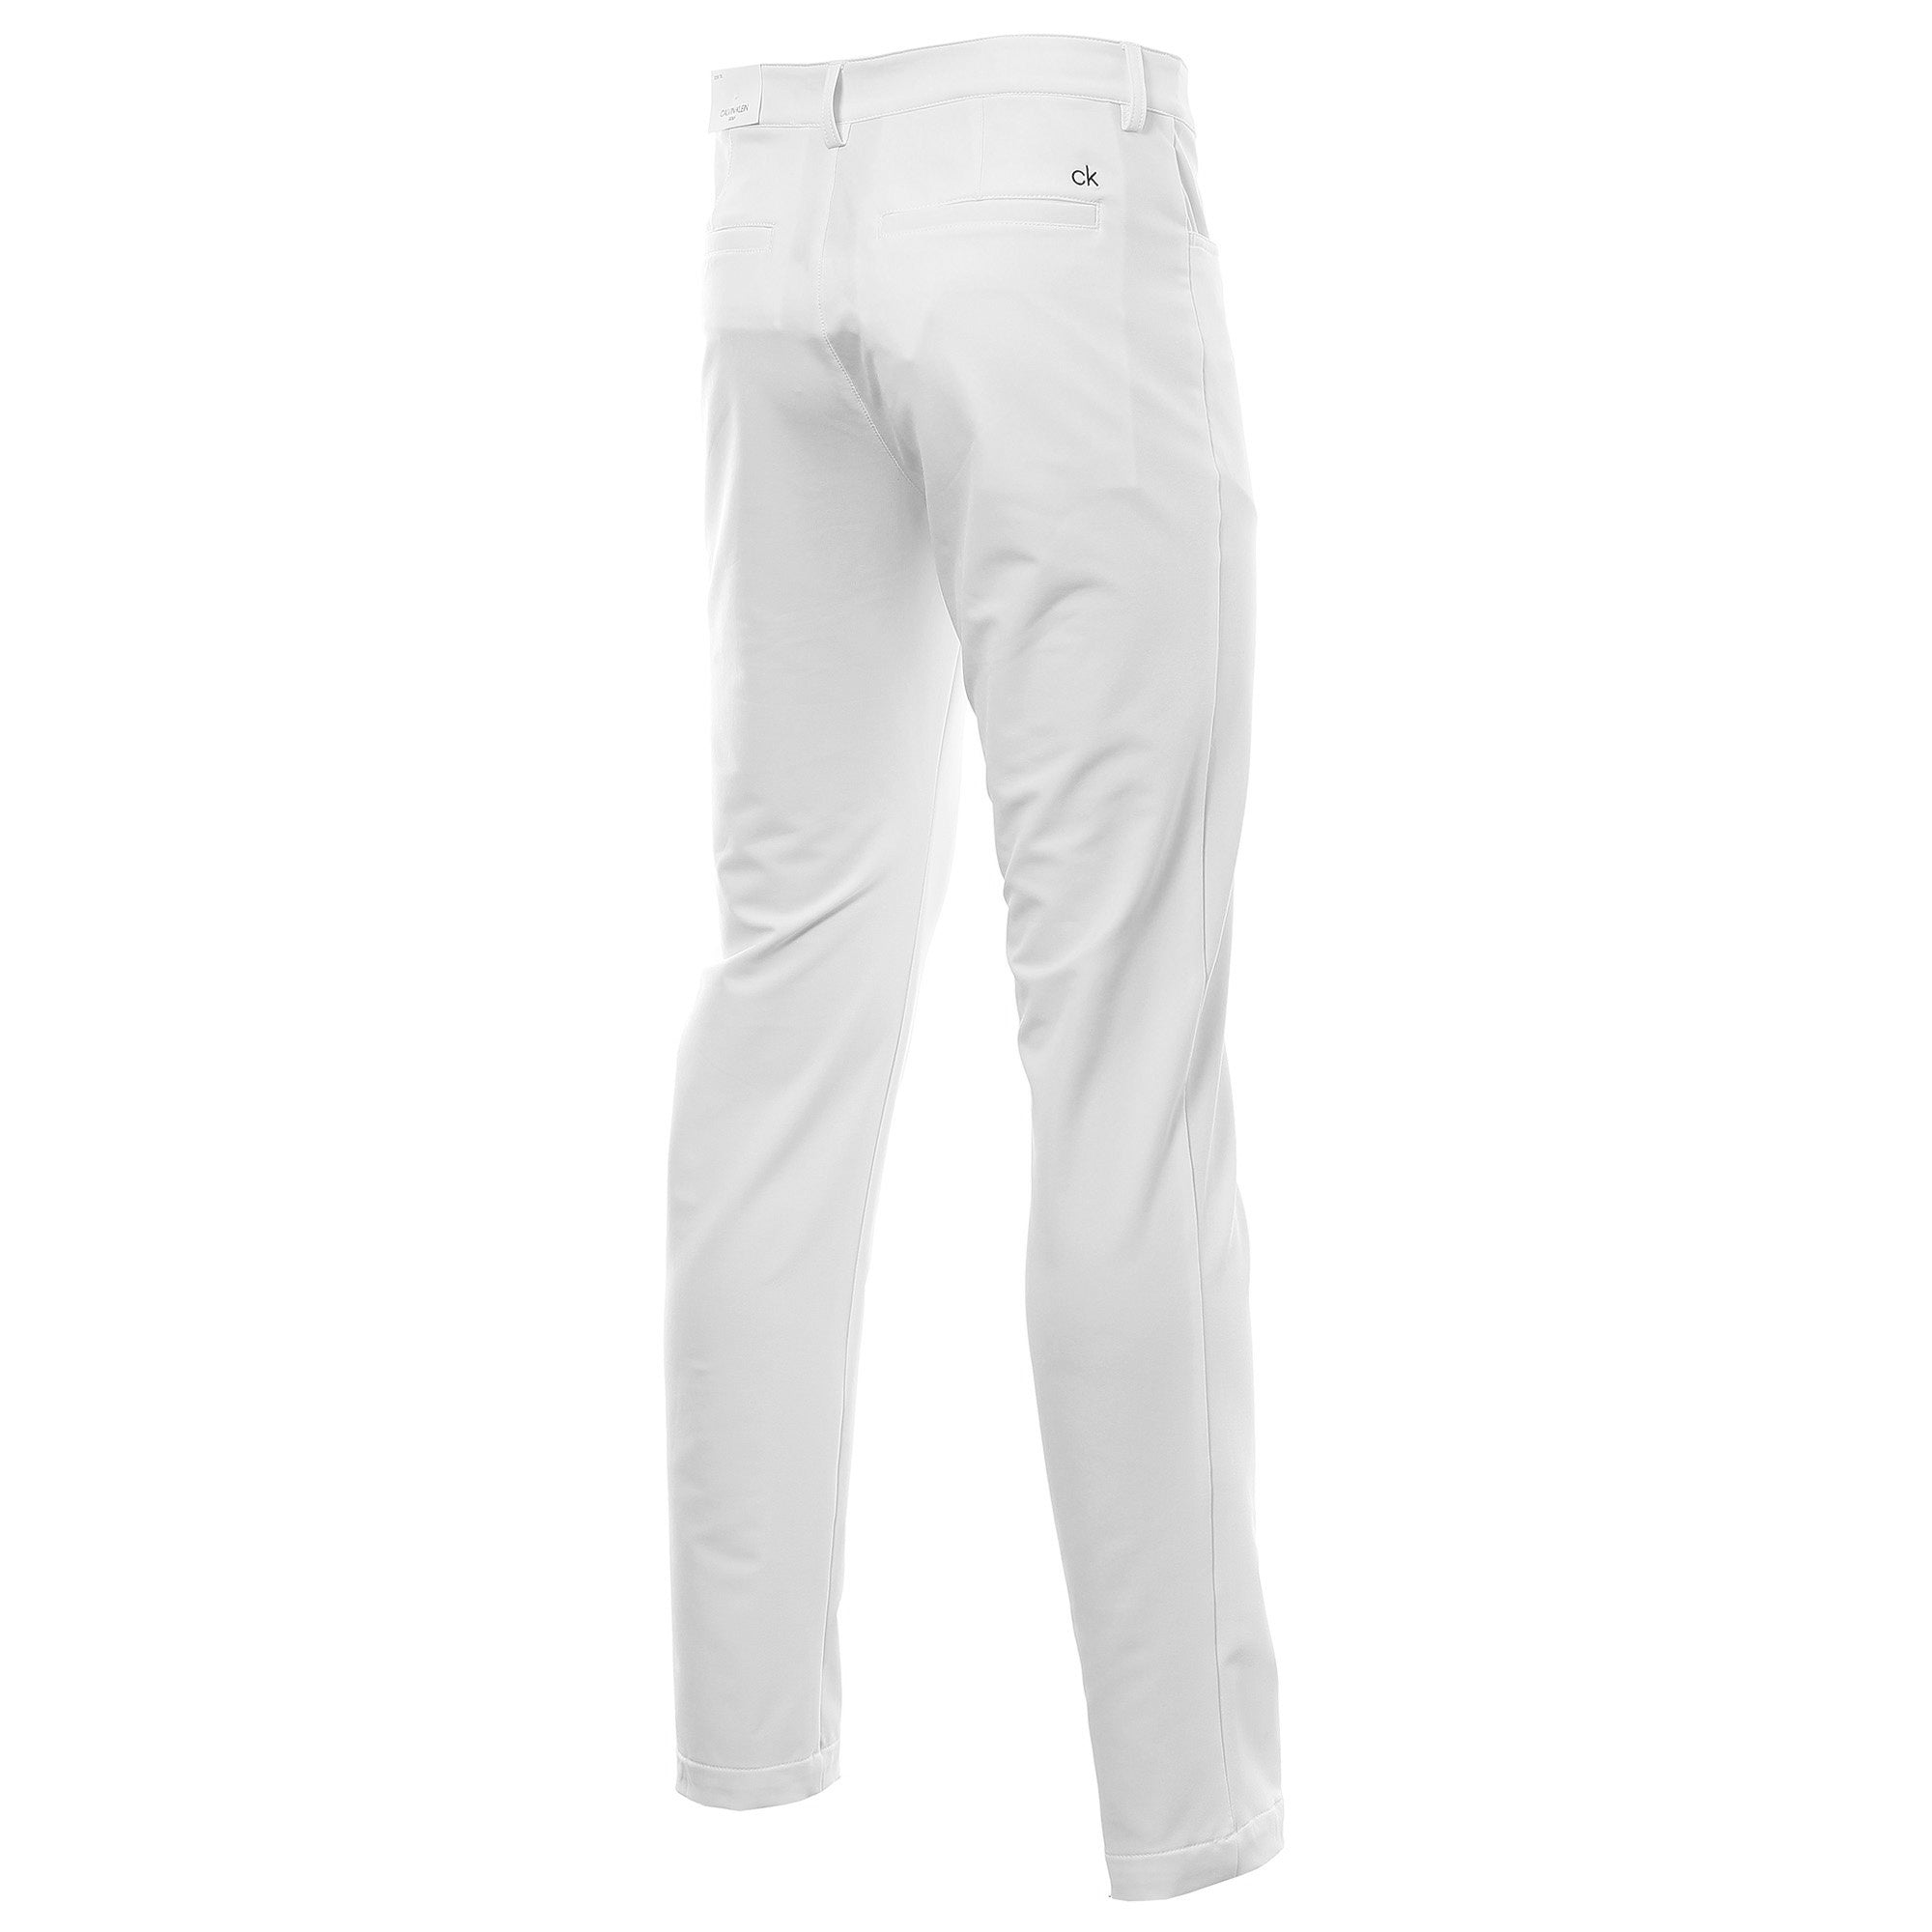 Calvin Klein Golf Genius Trouser CKMS19213 White | Function18